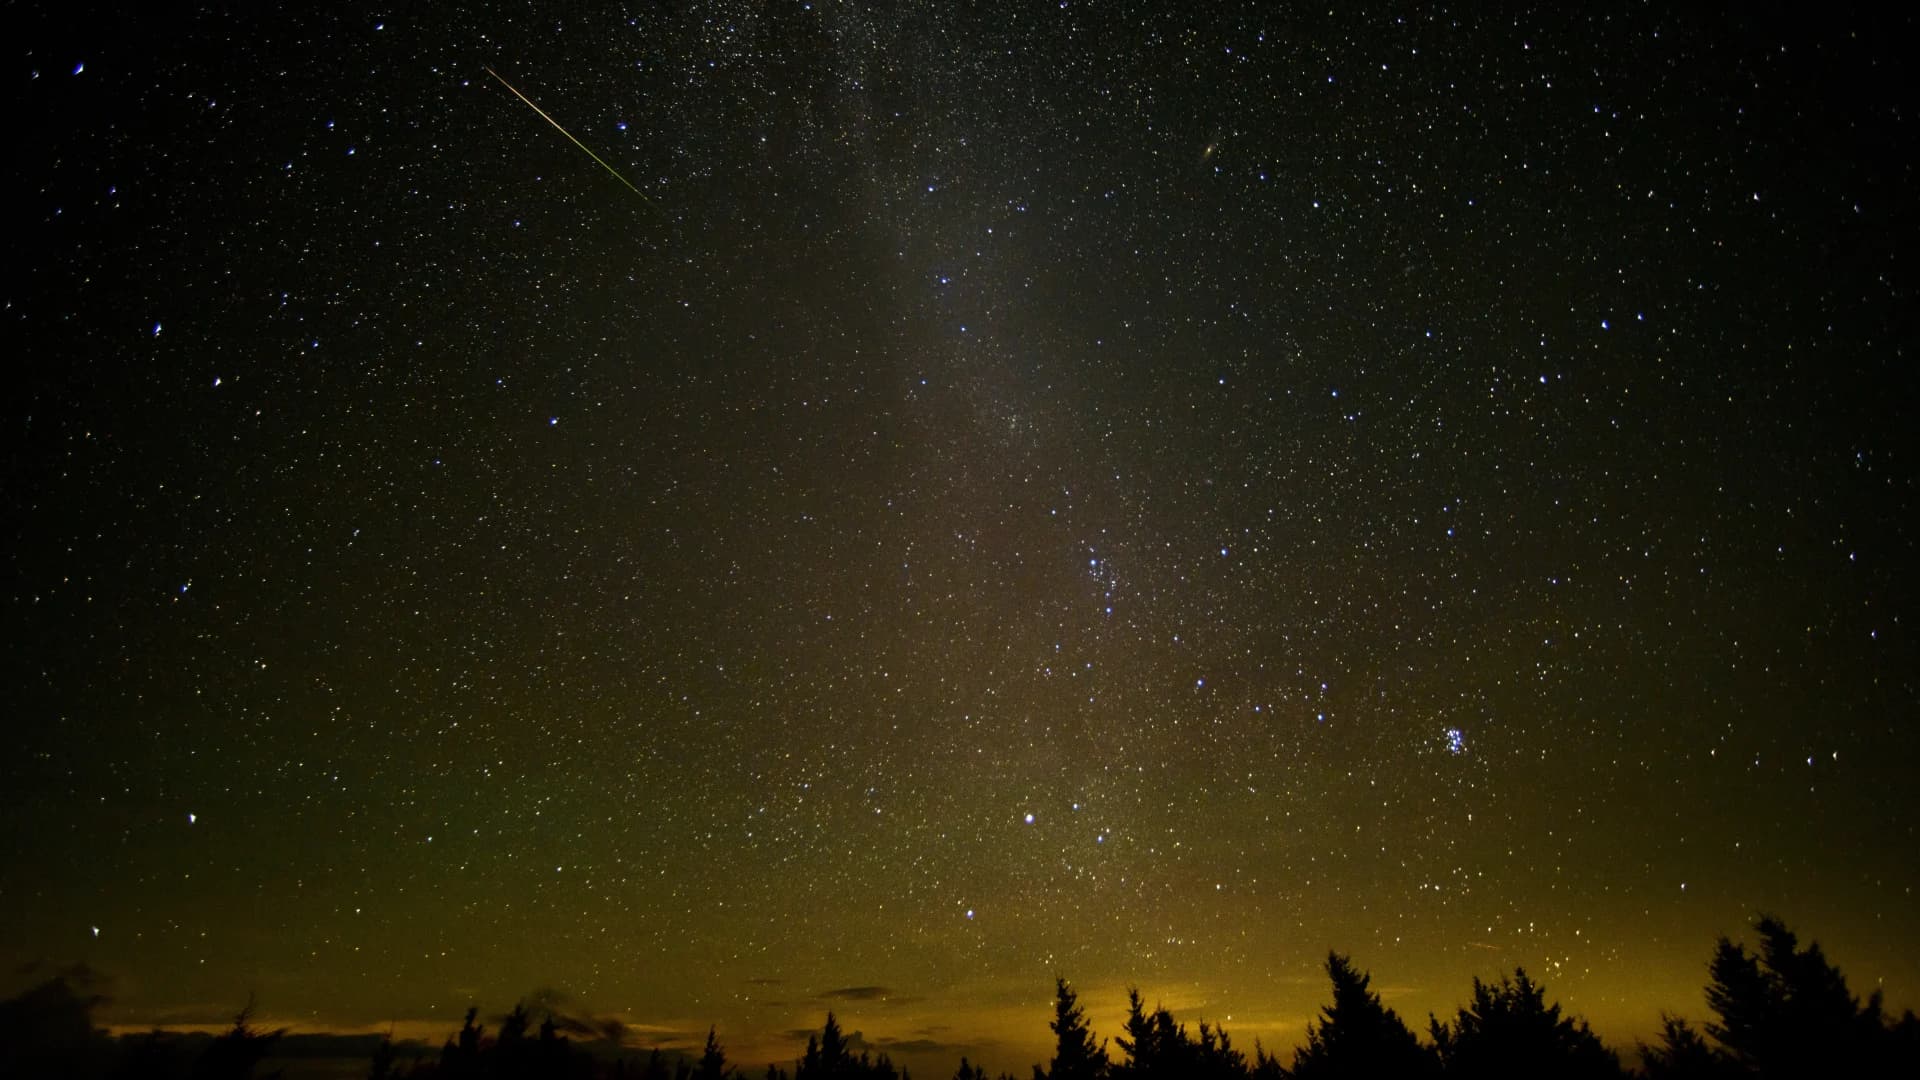 Lyrid meteor shower peaks this week; here's how to see them